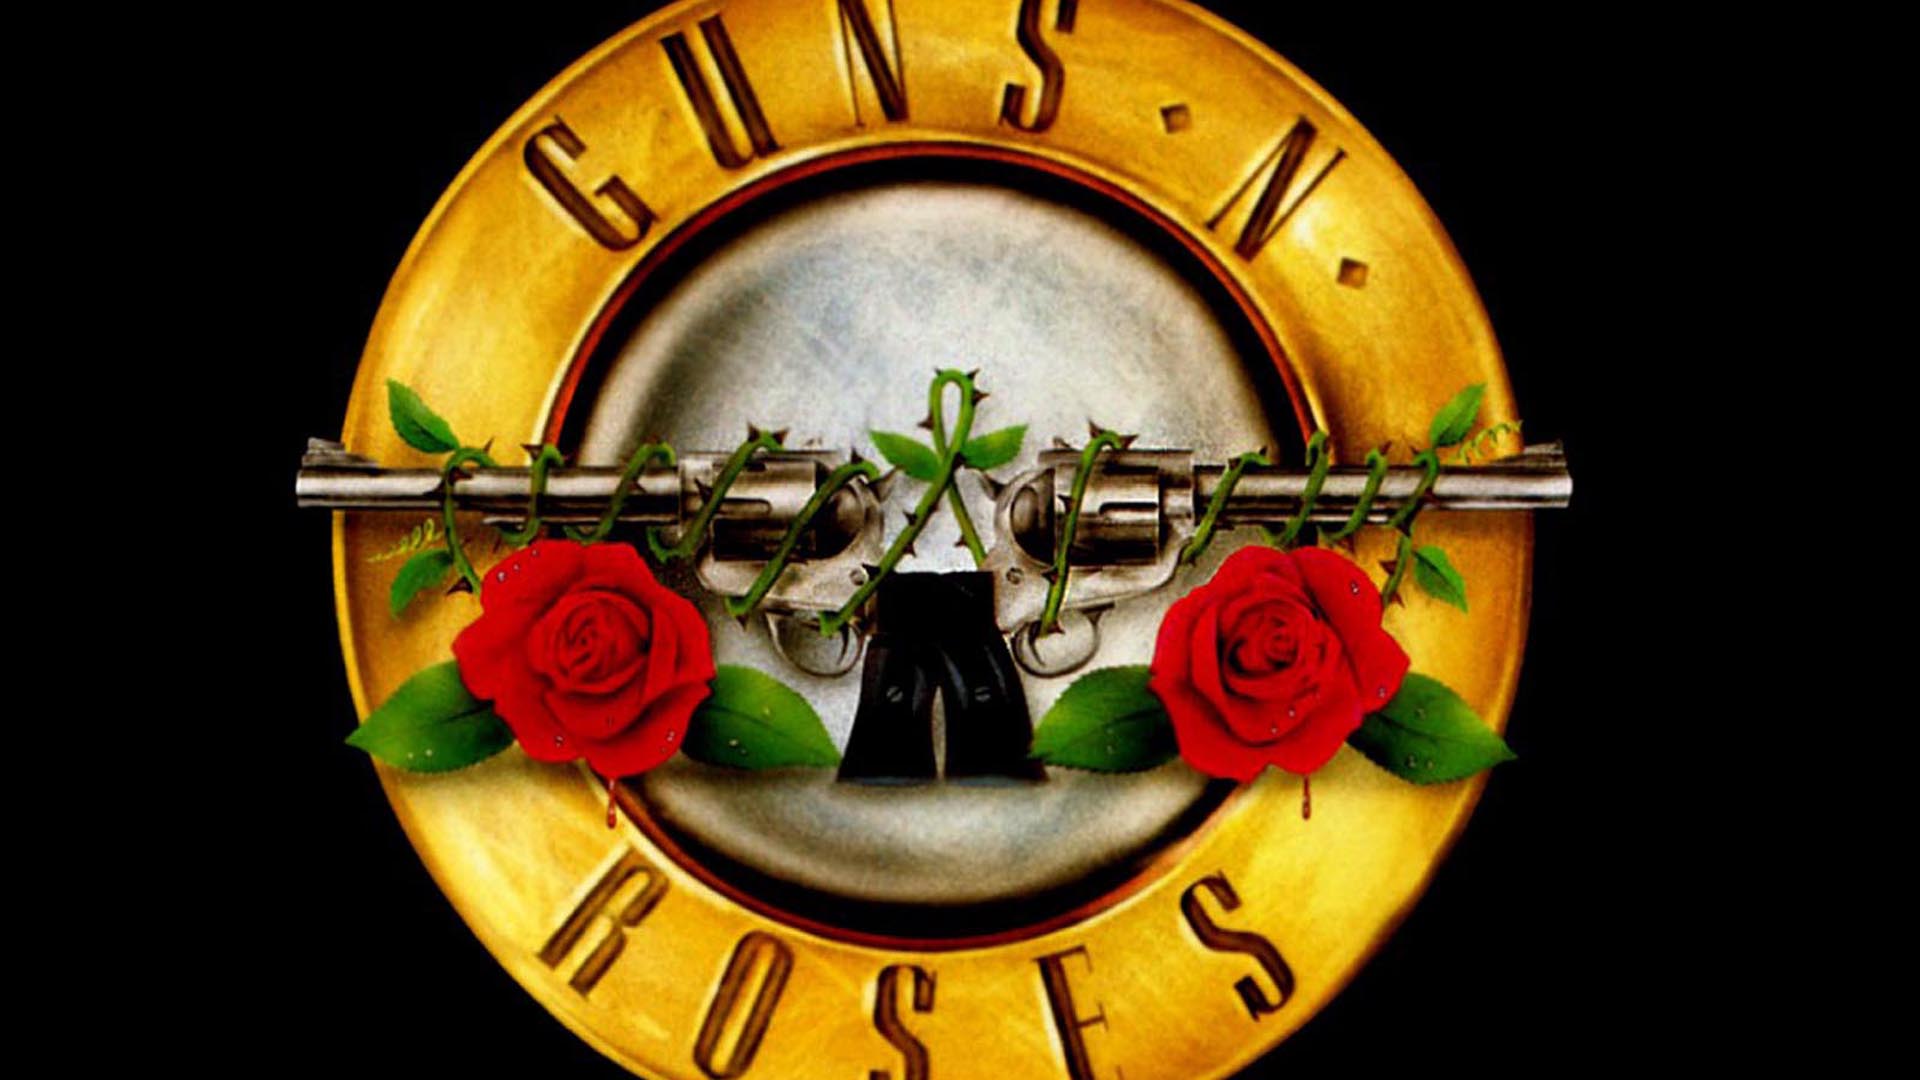 Guns n roses Wallpaper HD Desktop picture iPhones Backgrounds